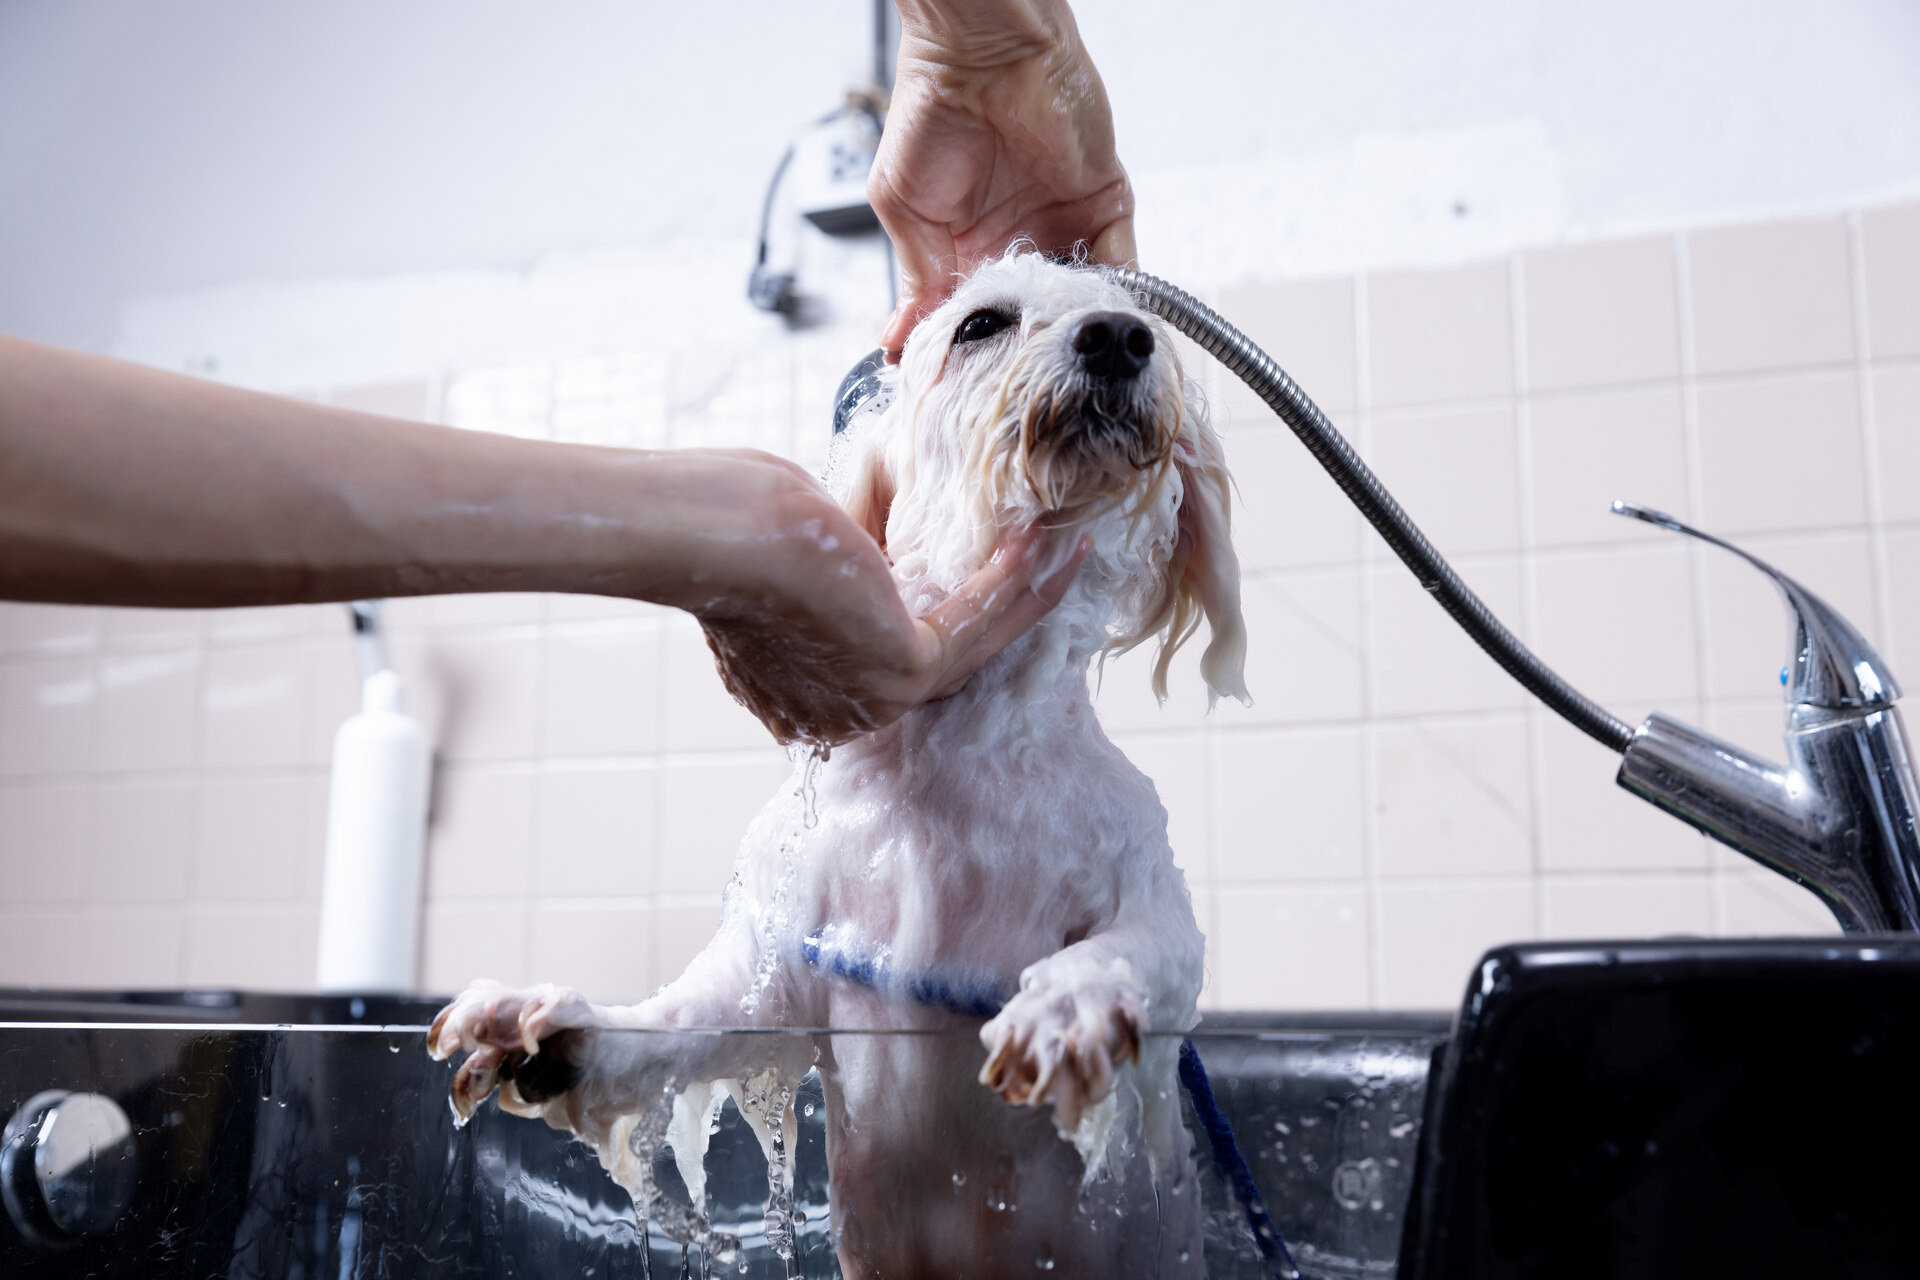 A woman washing a dog in a sink